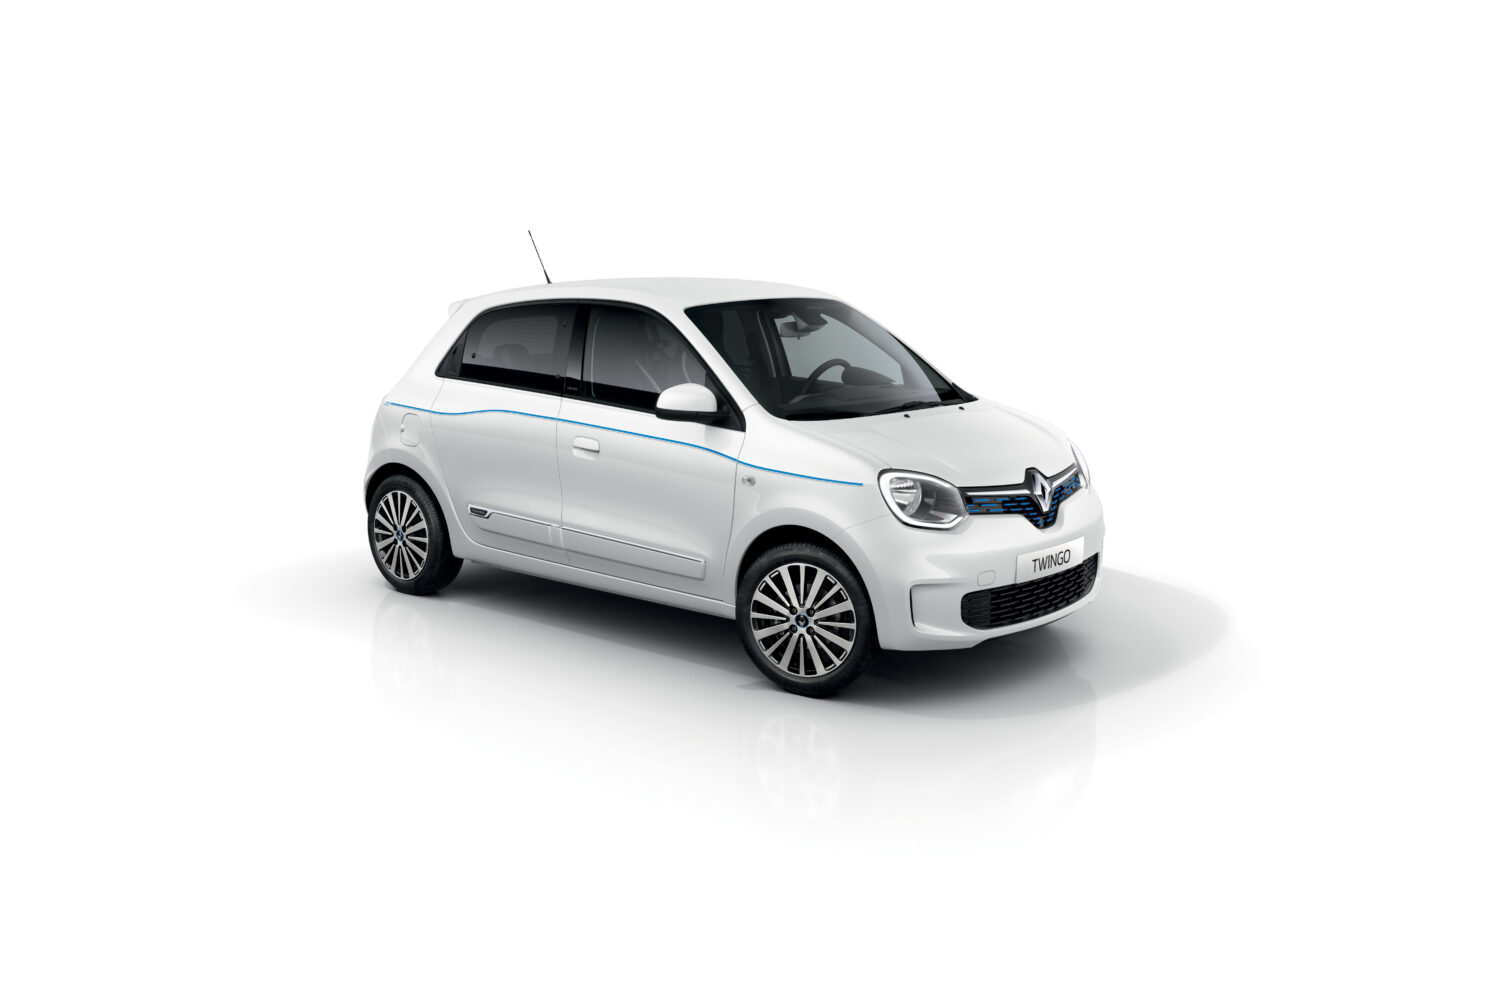 2020 - Nouvelle Renault  TWINGO Electric..jpeg